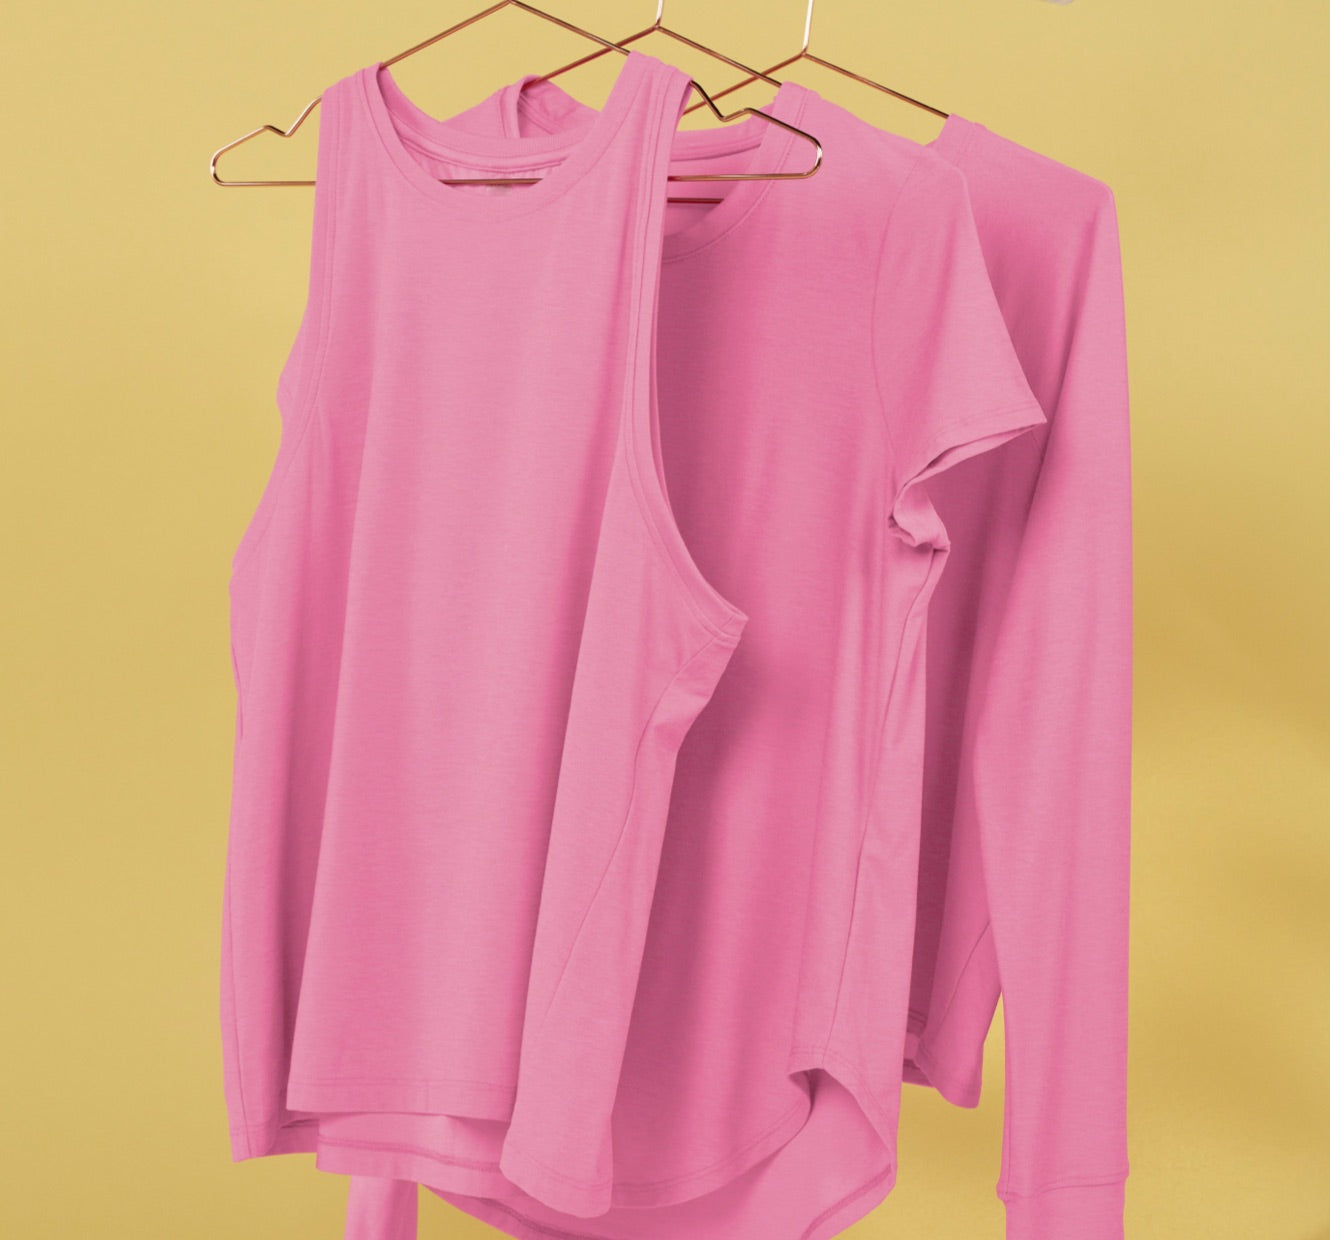 pink tank top, pink short sleeve top, pink long sleeve top. 